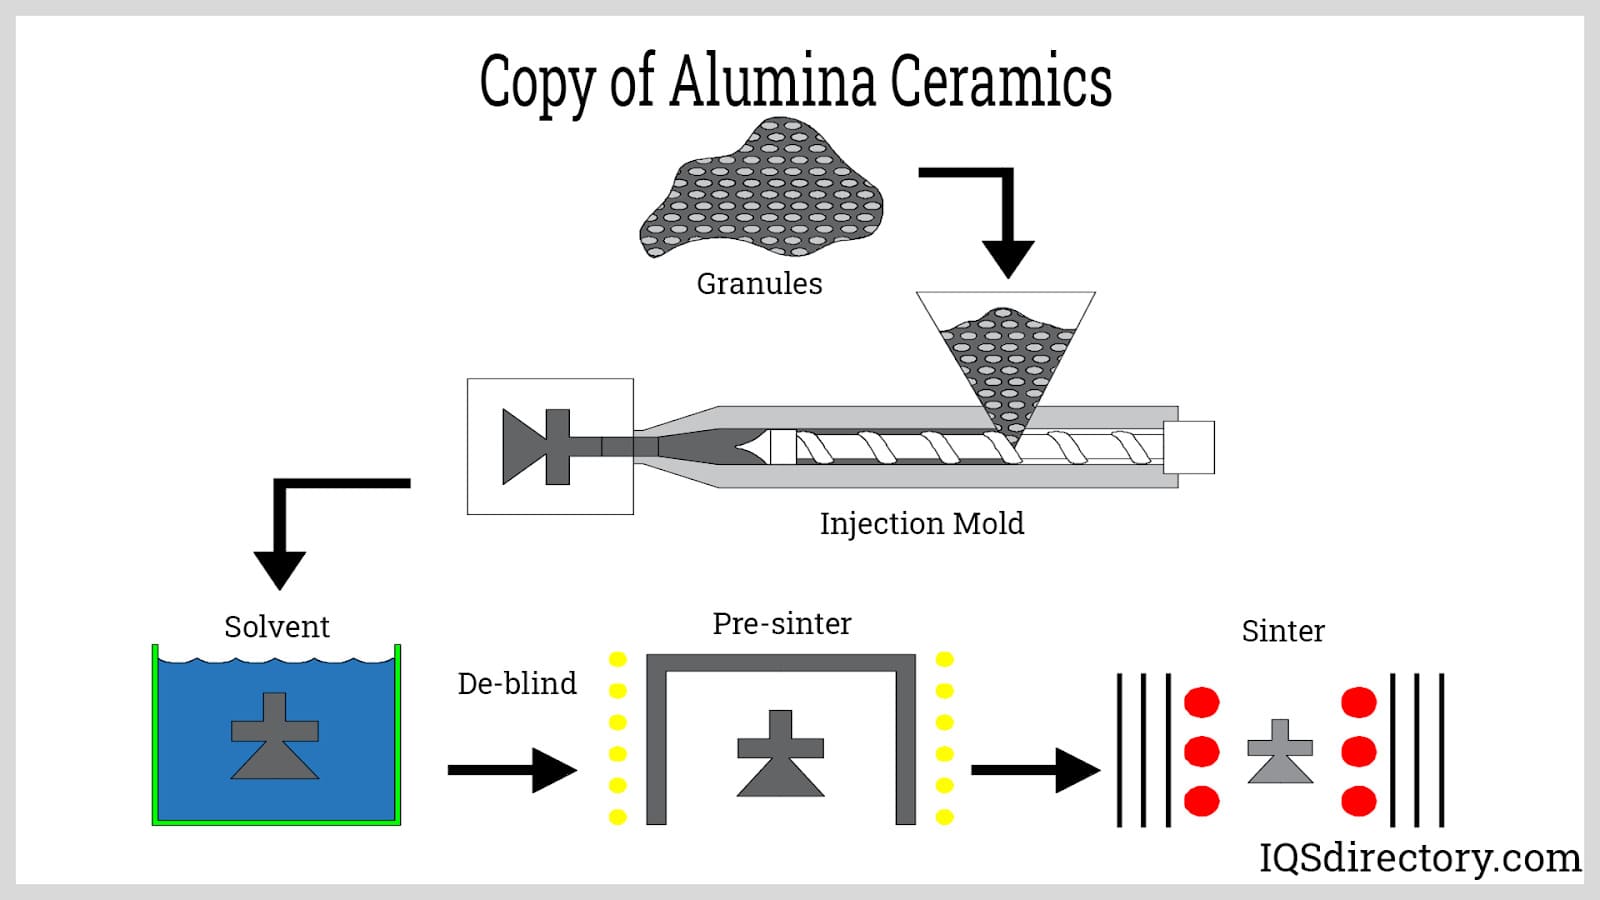 Copy of Alumina Ceramics